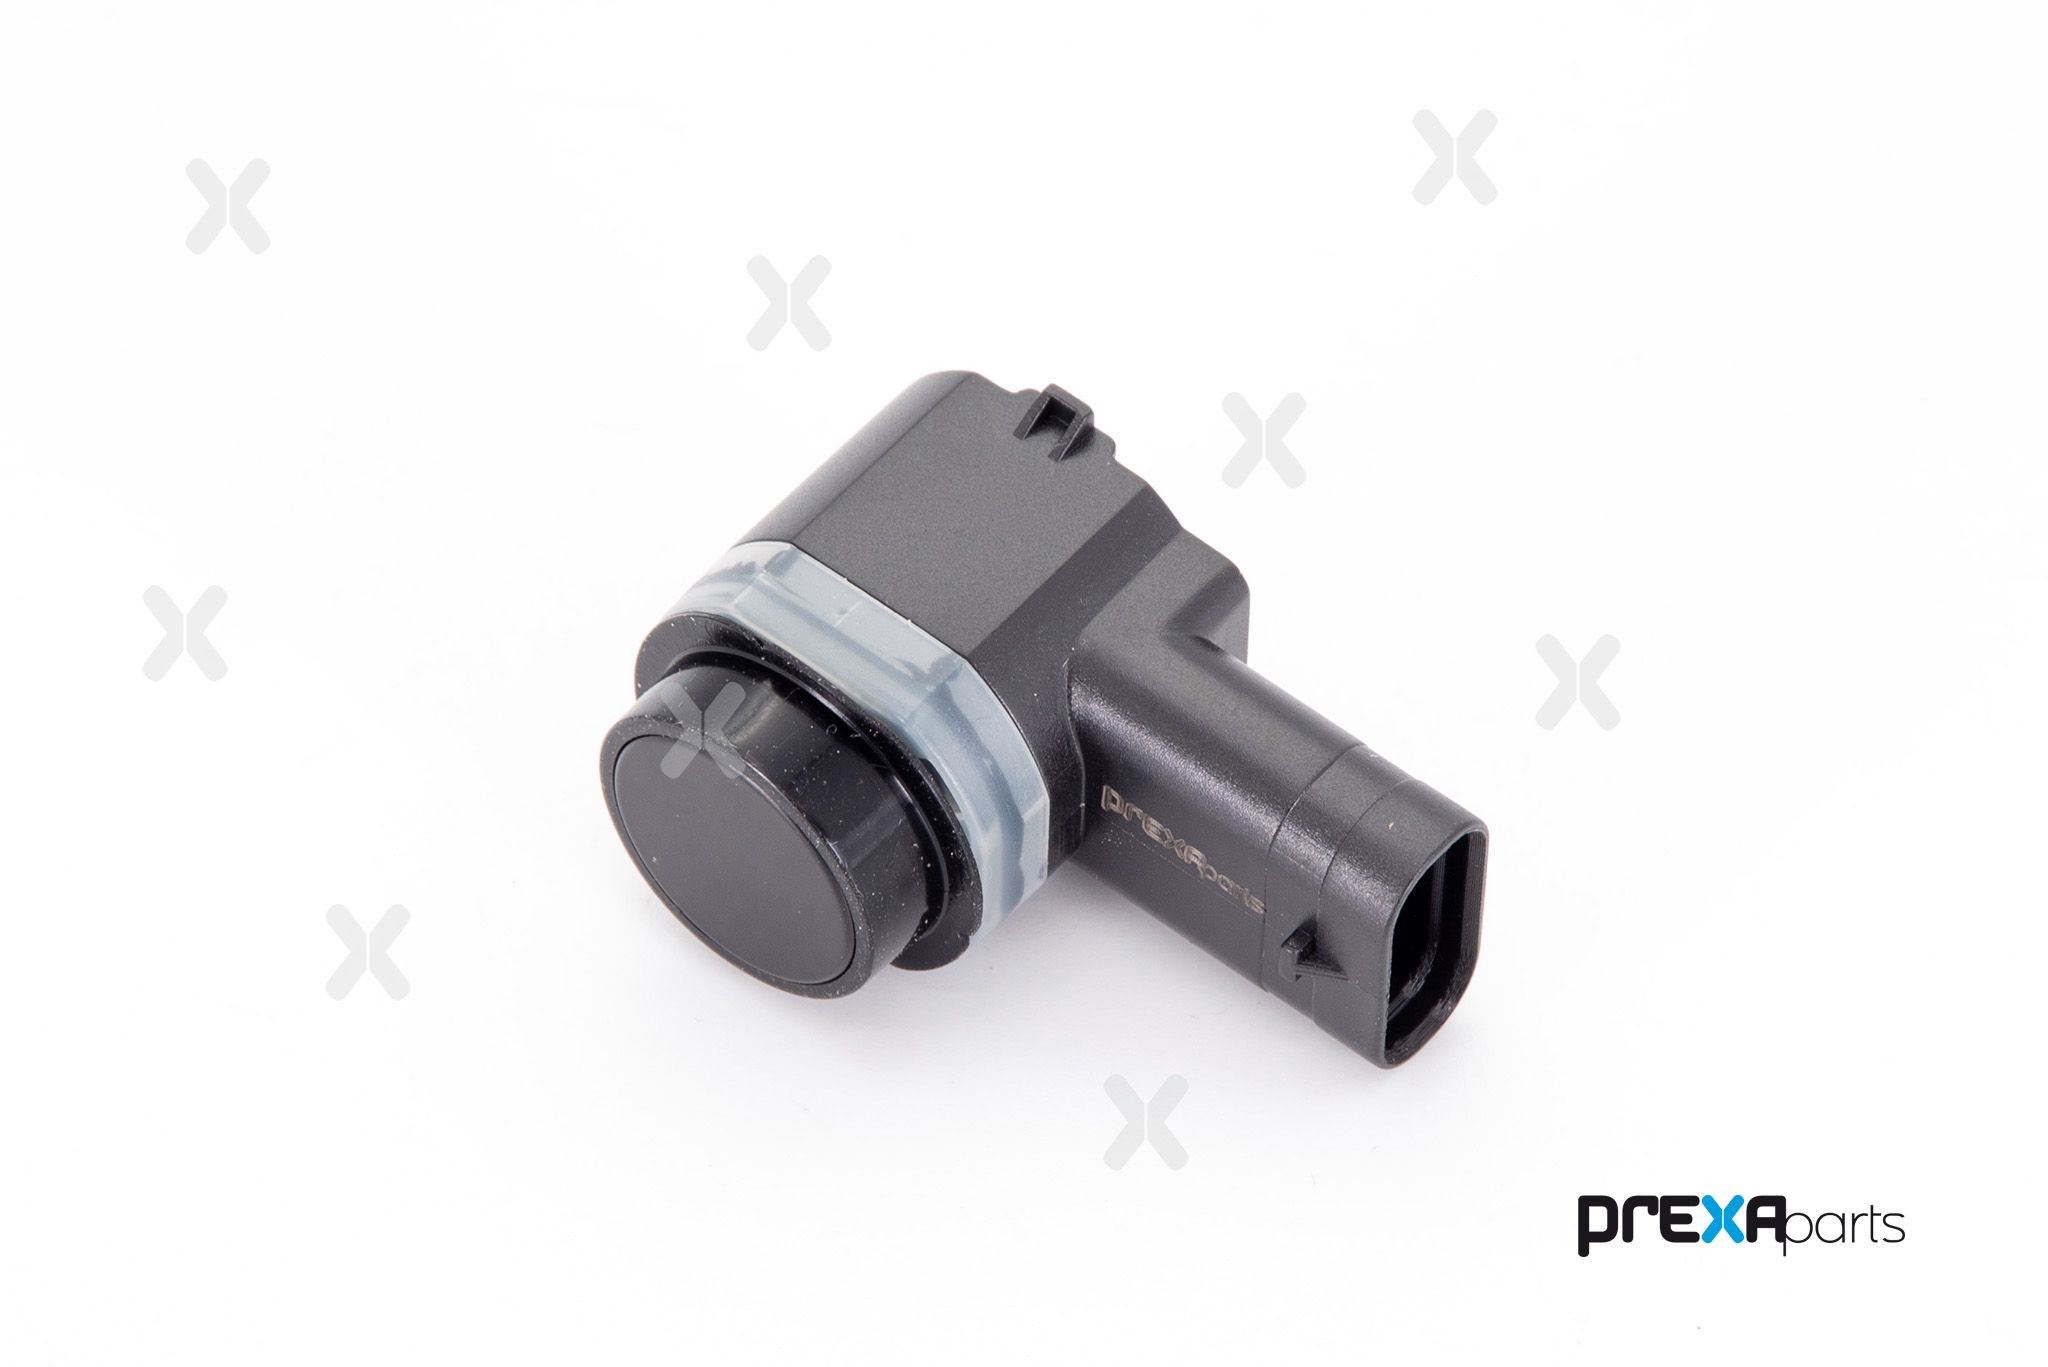 PREXAparts P503003 Parking sensor Ultrasonic Sensor